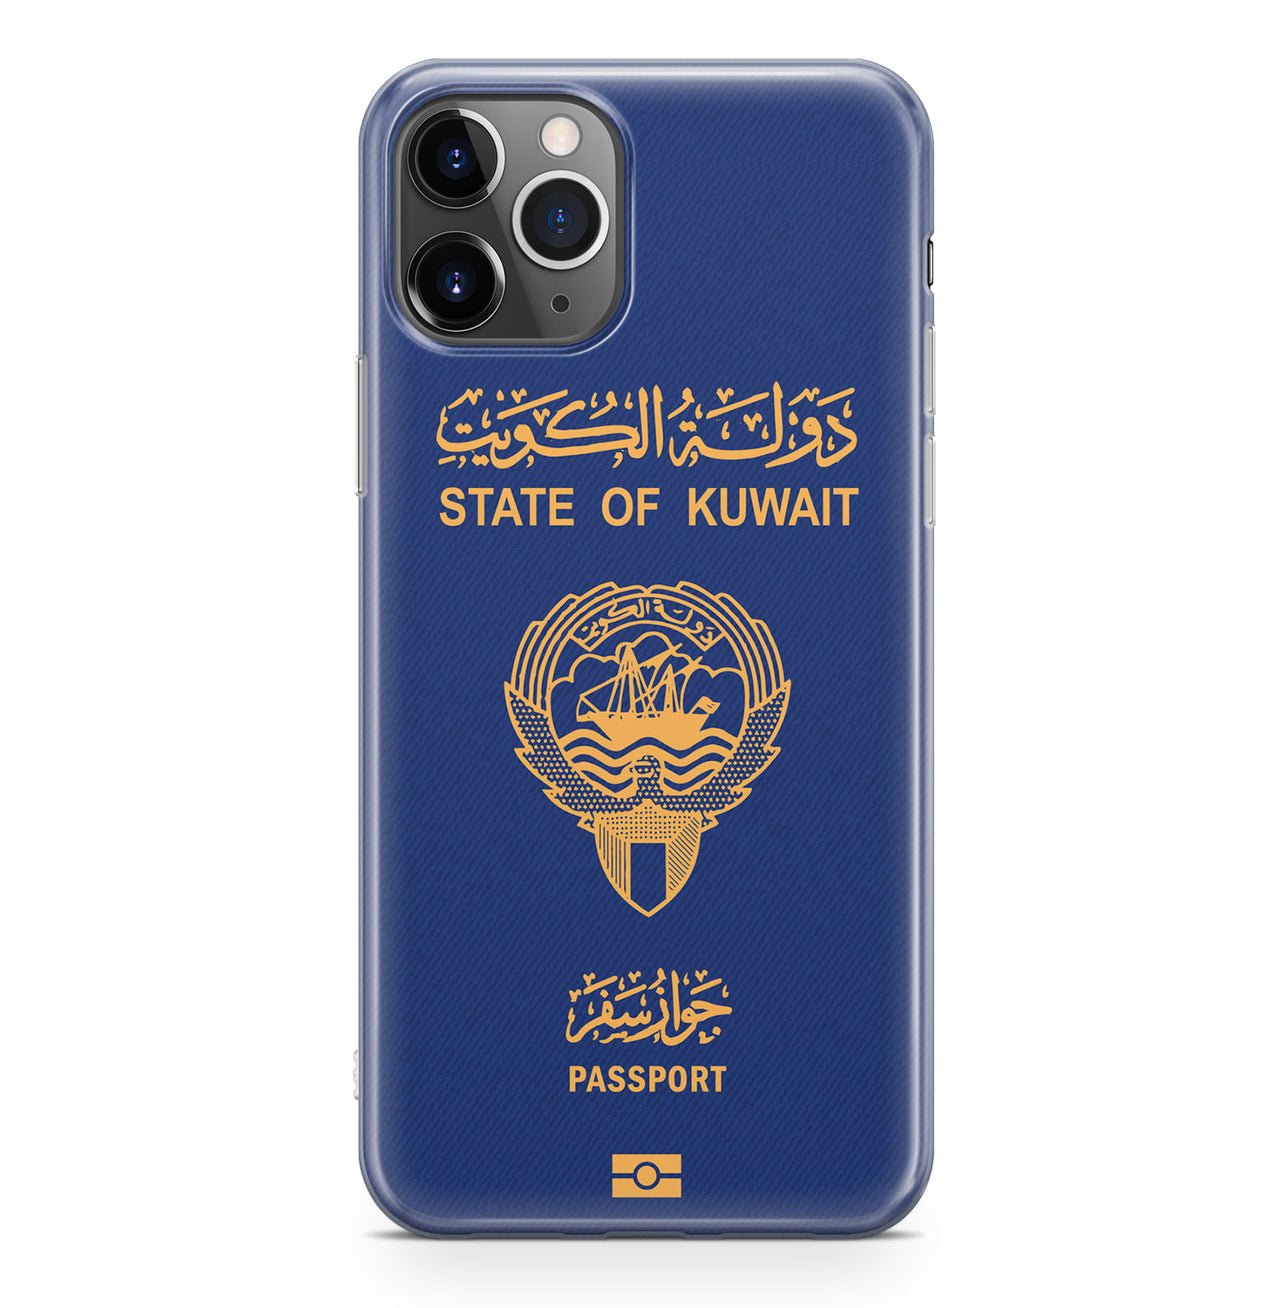 Kuwait Passport Designed iPhone Cases